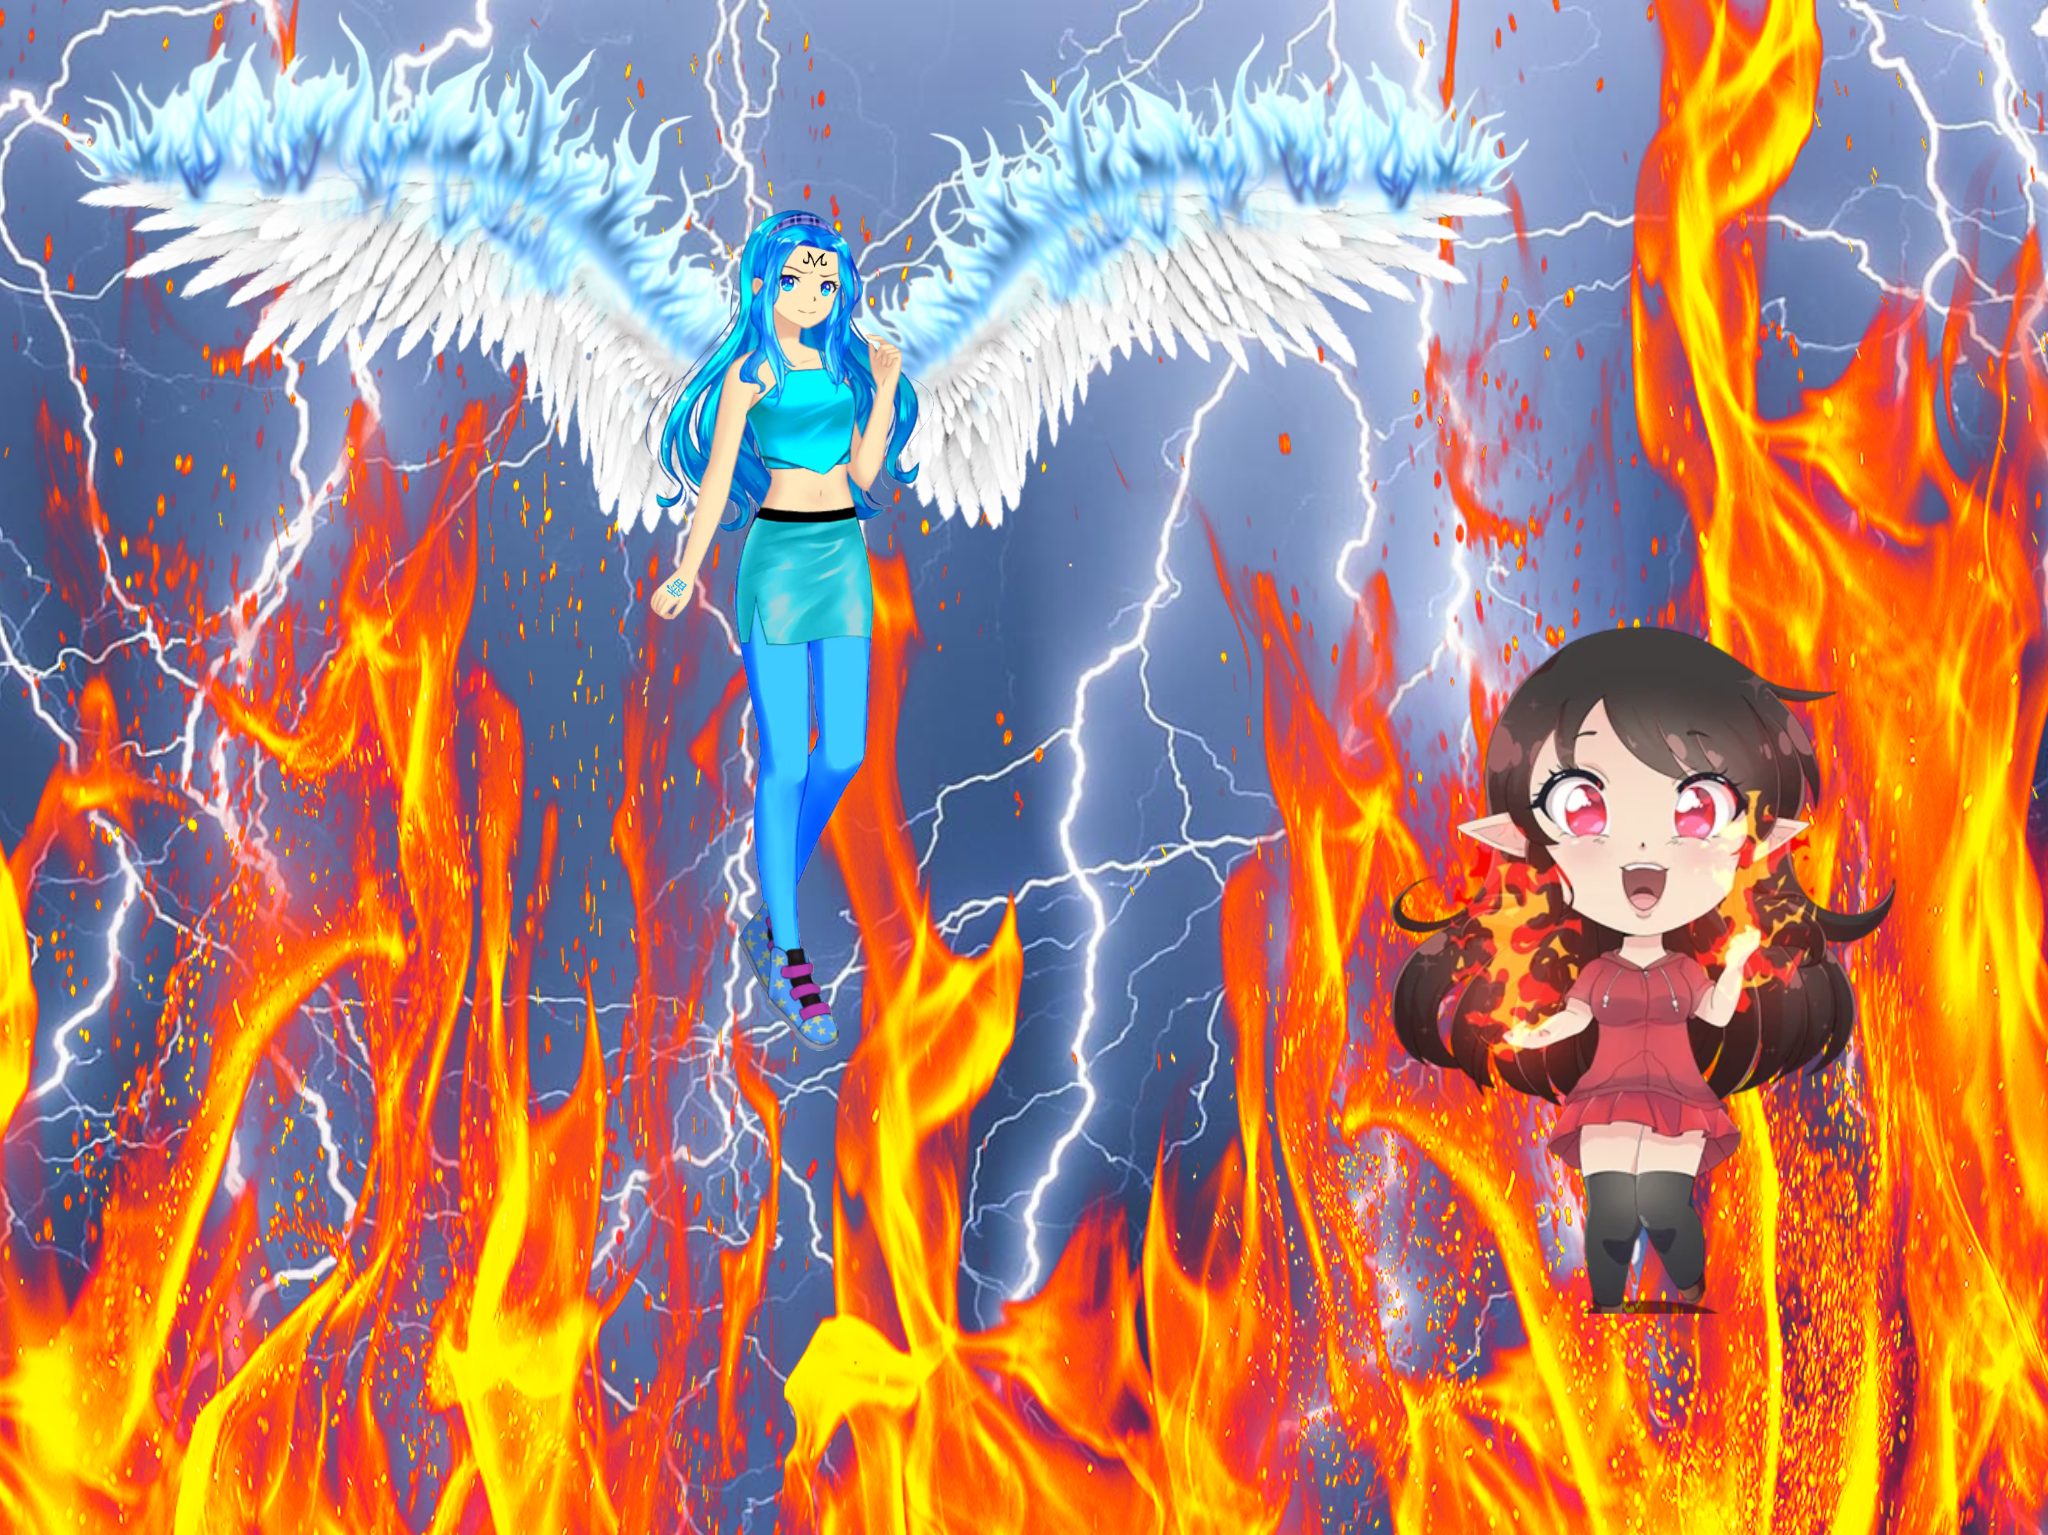 Ice Demon vs Fire Angel by GENZOMAN on deviantART